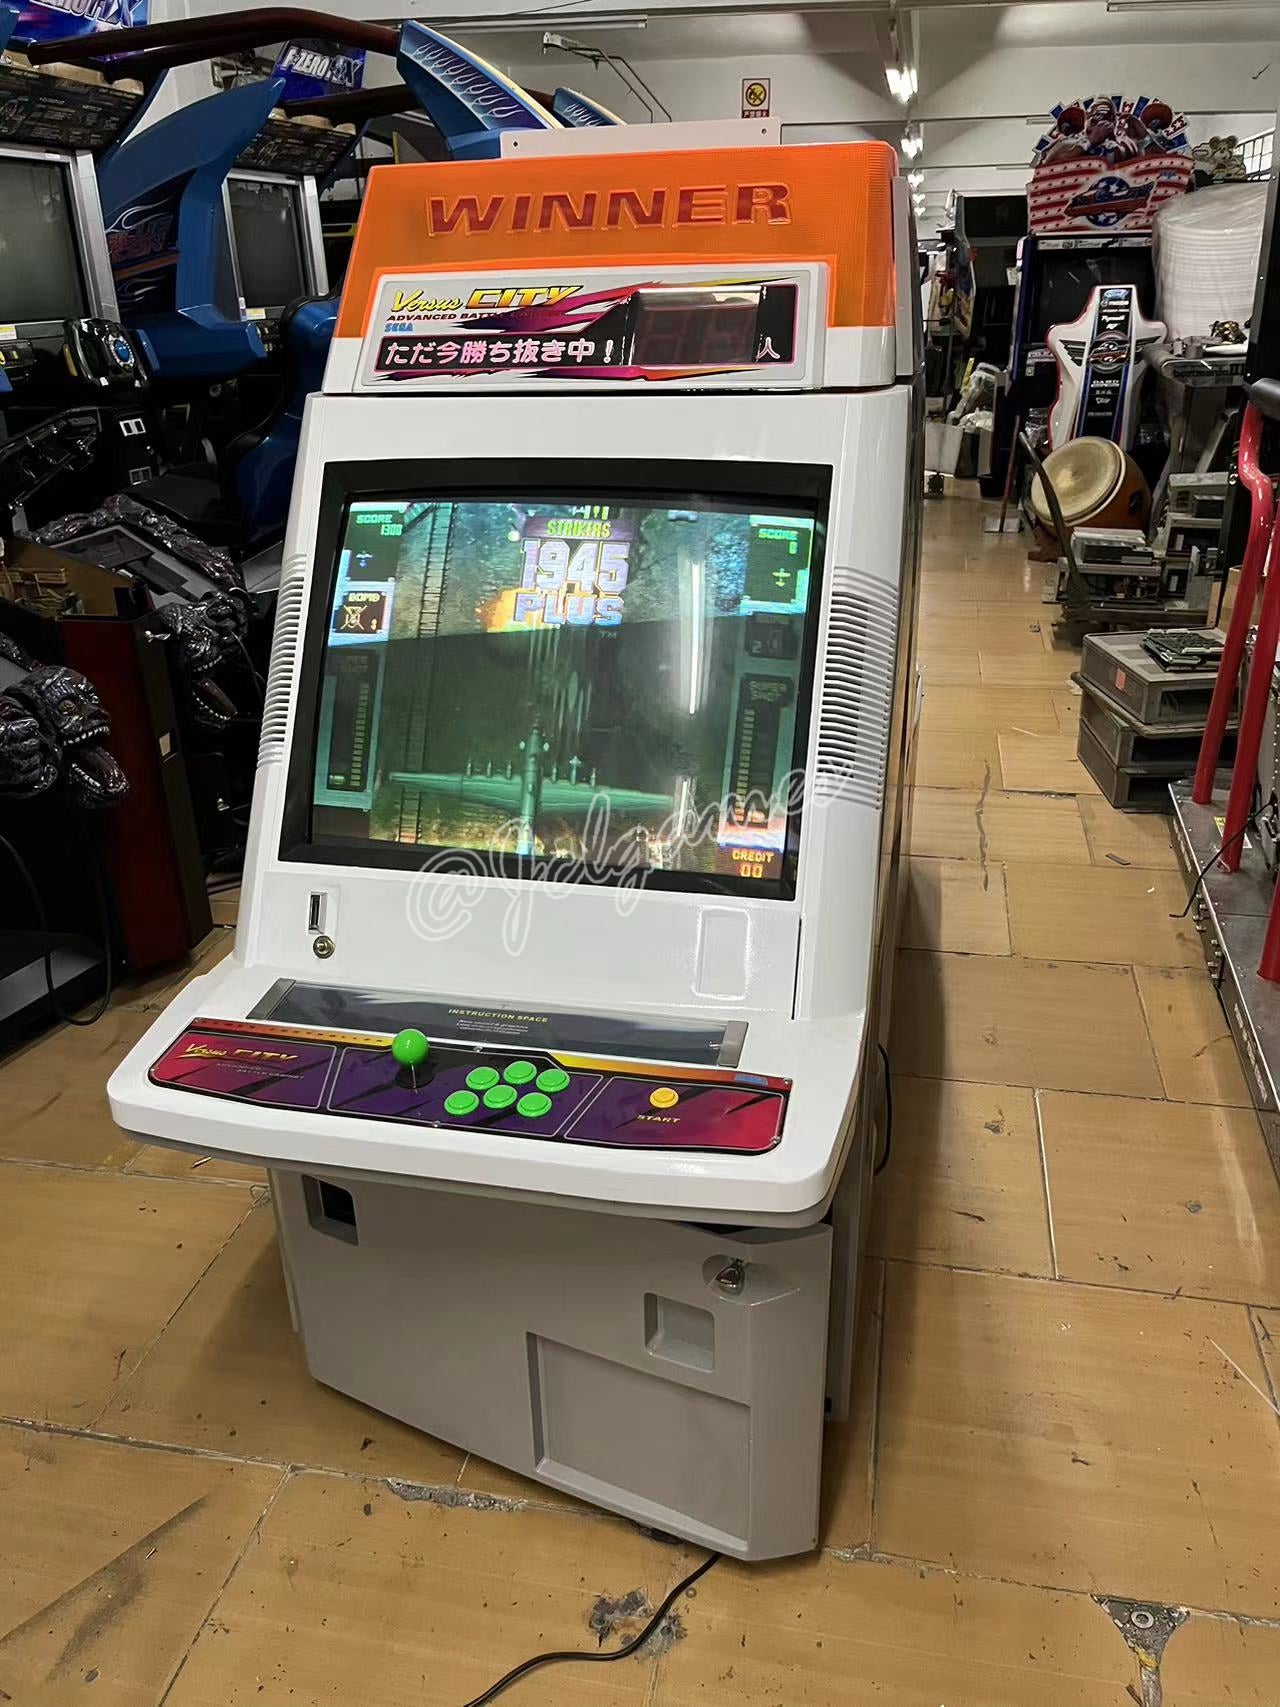 Buy Sega Versus City Candy Cabs Arcade Jcl games 